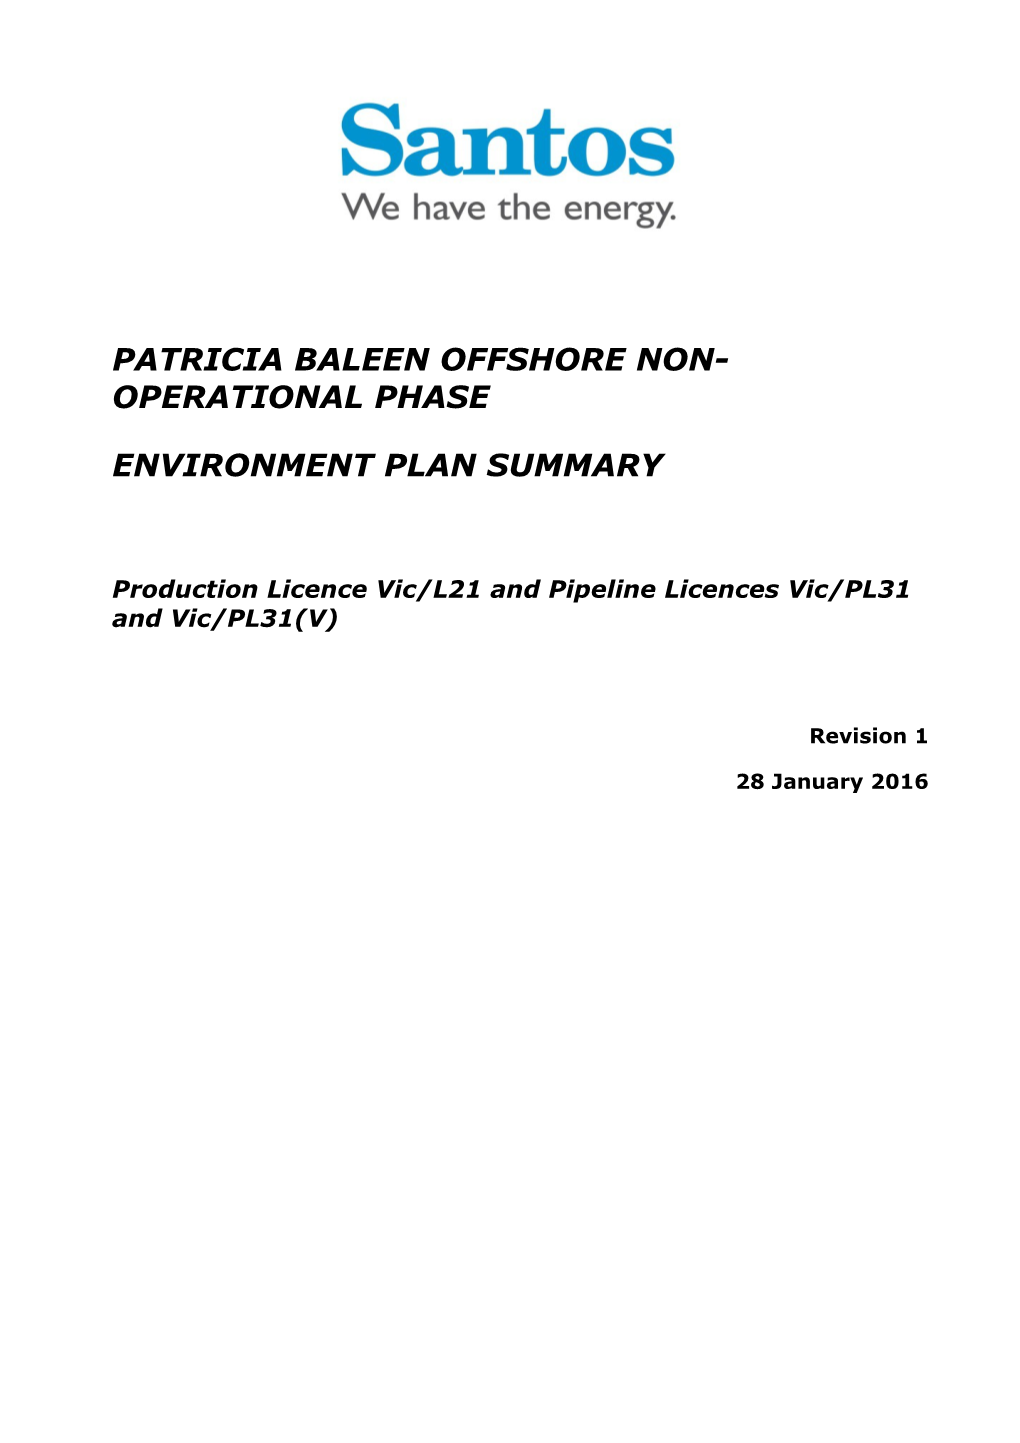 Pab Non-Operational Phase Environment Plan Summary